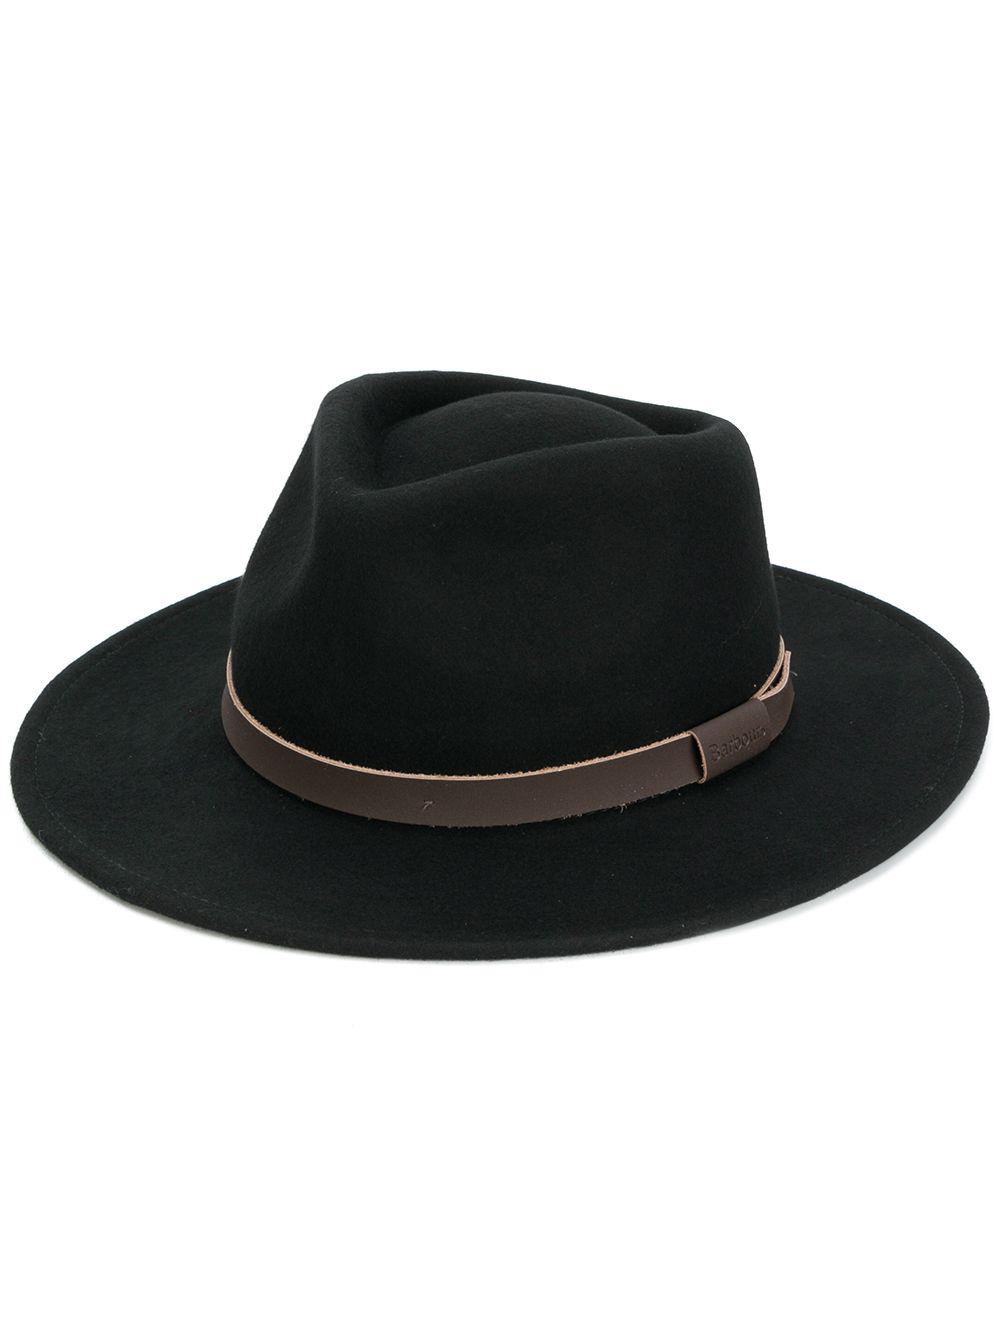 Barbour Wool Crushable Bushman Hat in Black for Men - Lyst